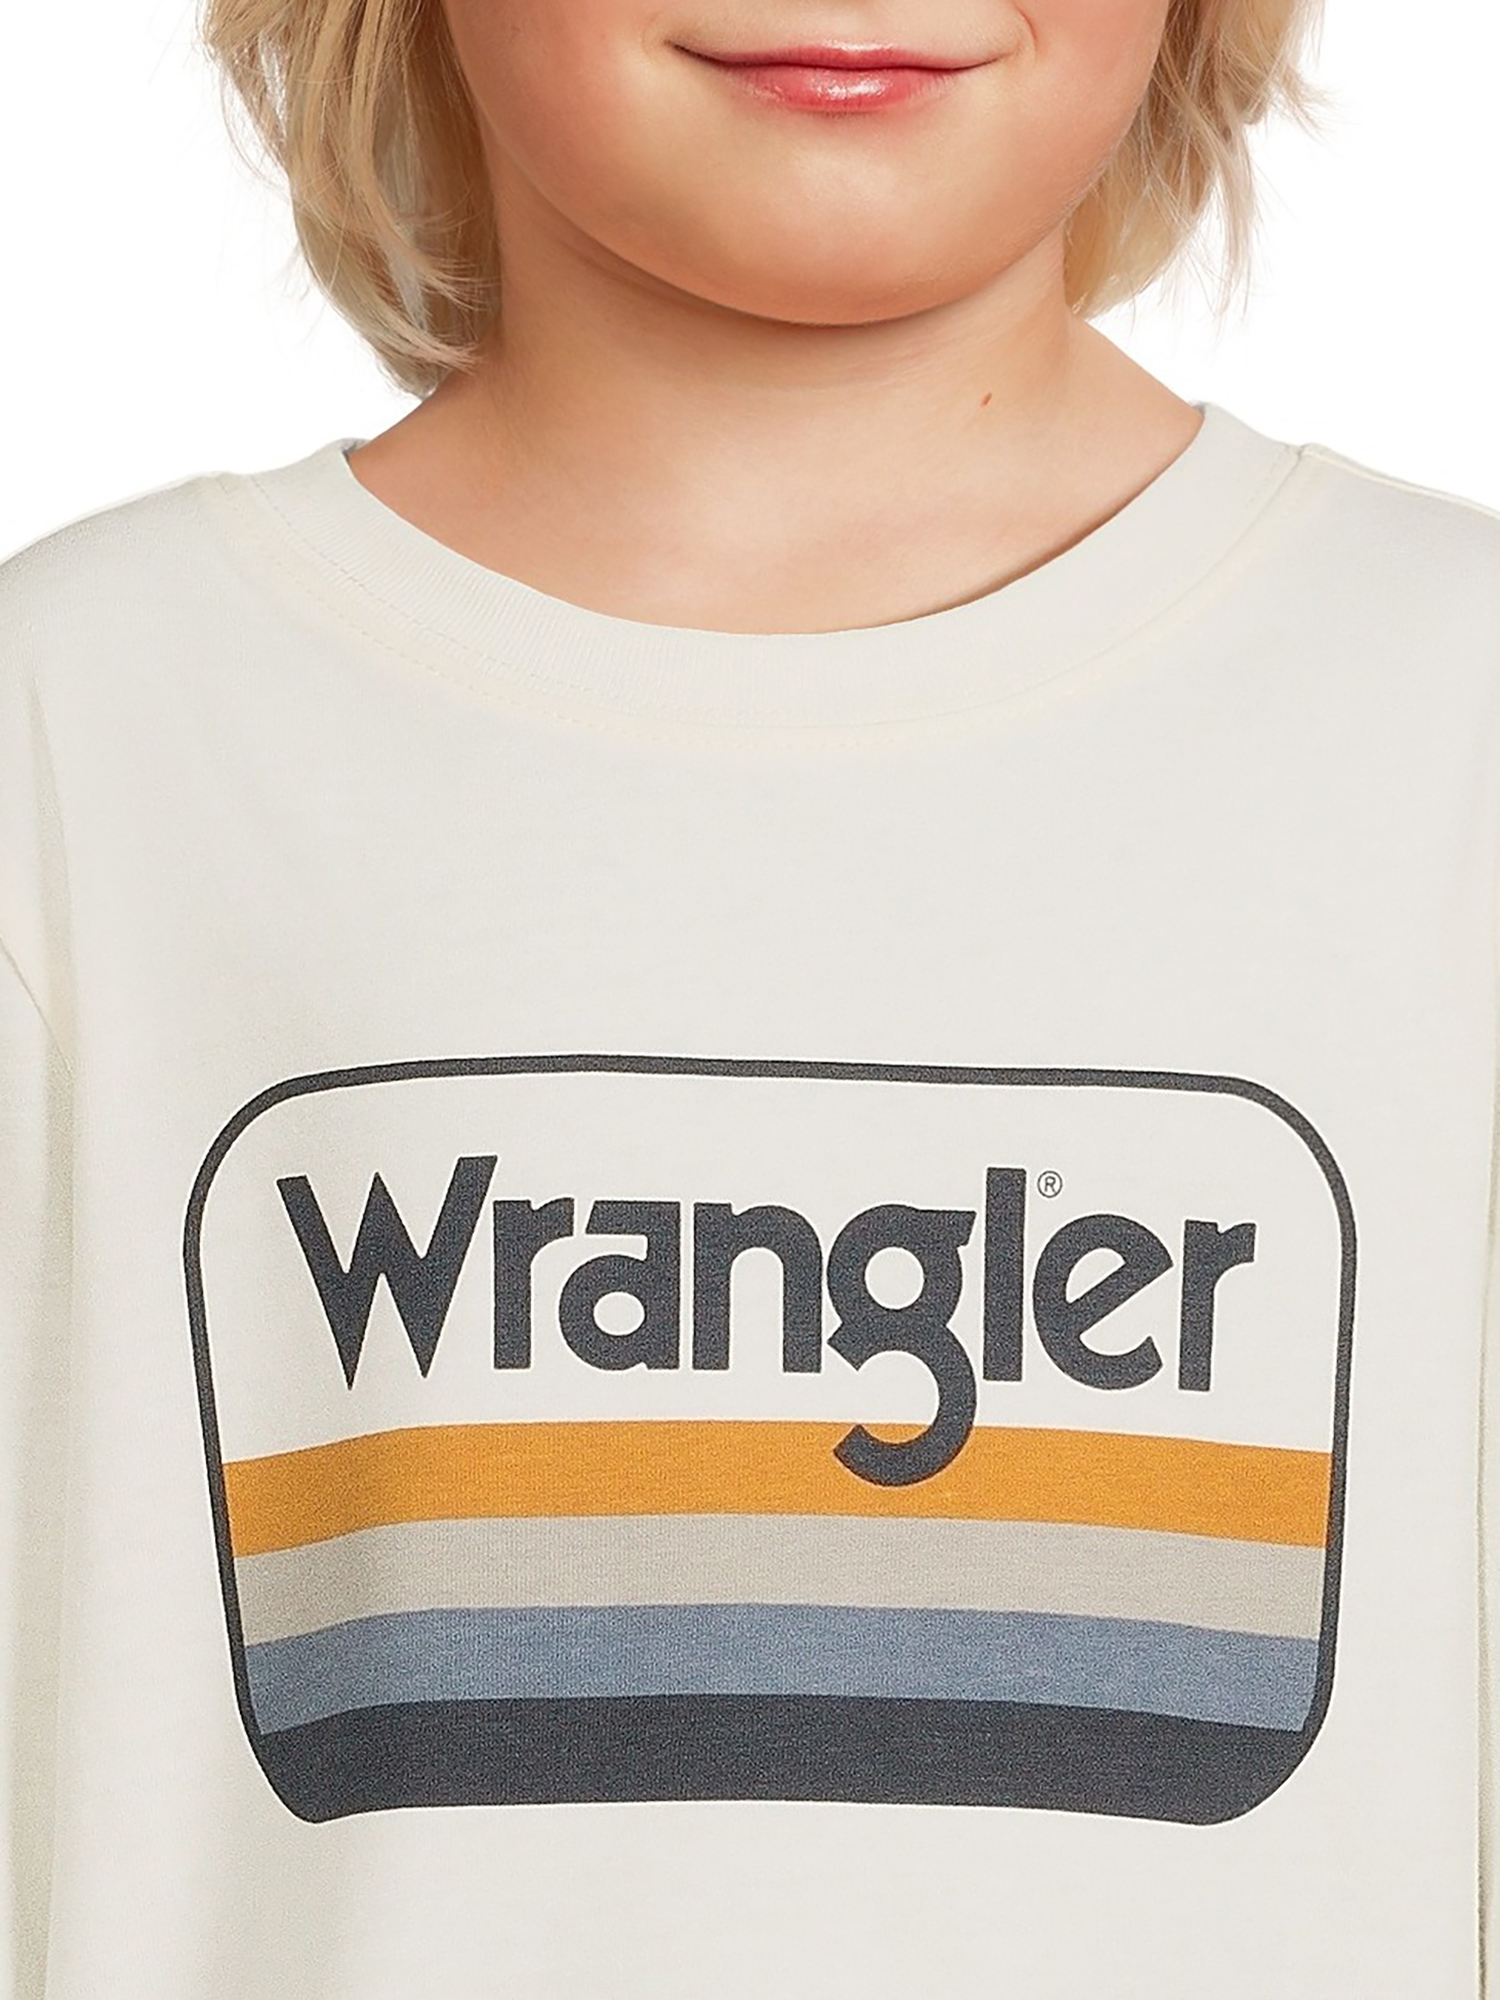 Wrangler Boys Long Sleeve Raglan and Graphic Tee, 2-Pack, Sizes 4-18 & Husky - image 5 of 5